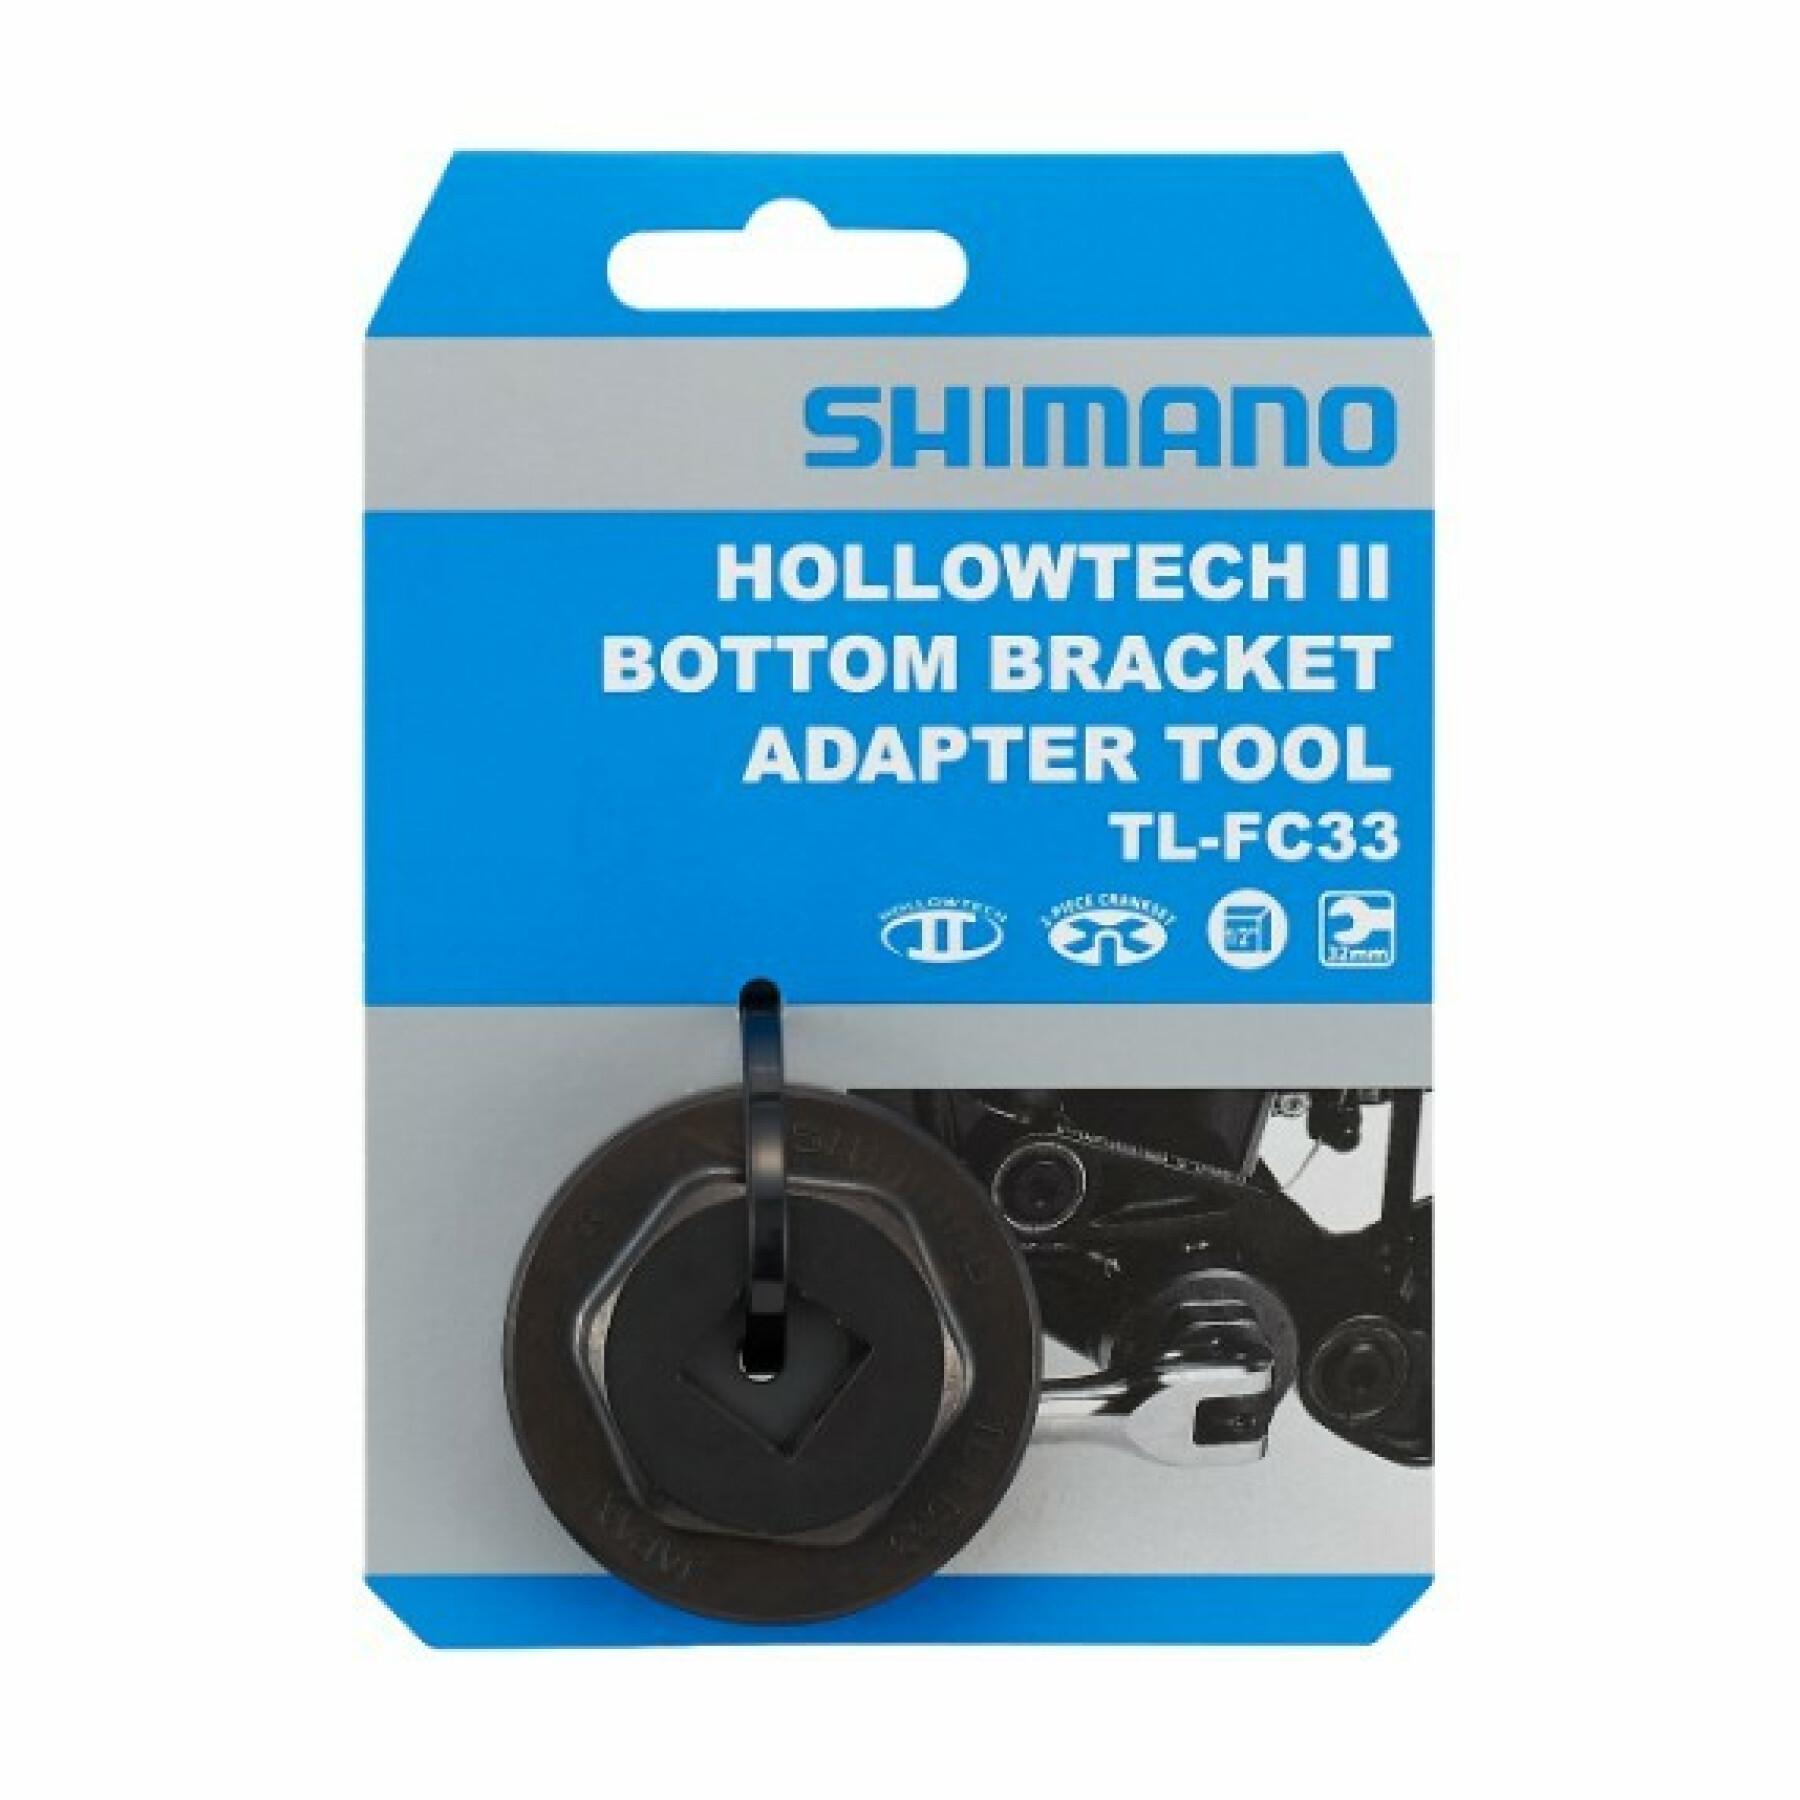 Adapter für das Tretlagergehäuse Shimano HOLLOWTECH II TL-FC33